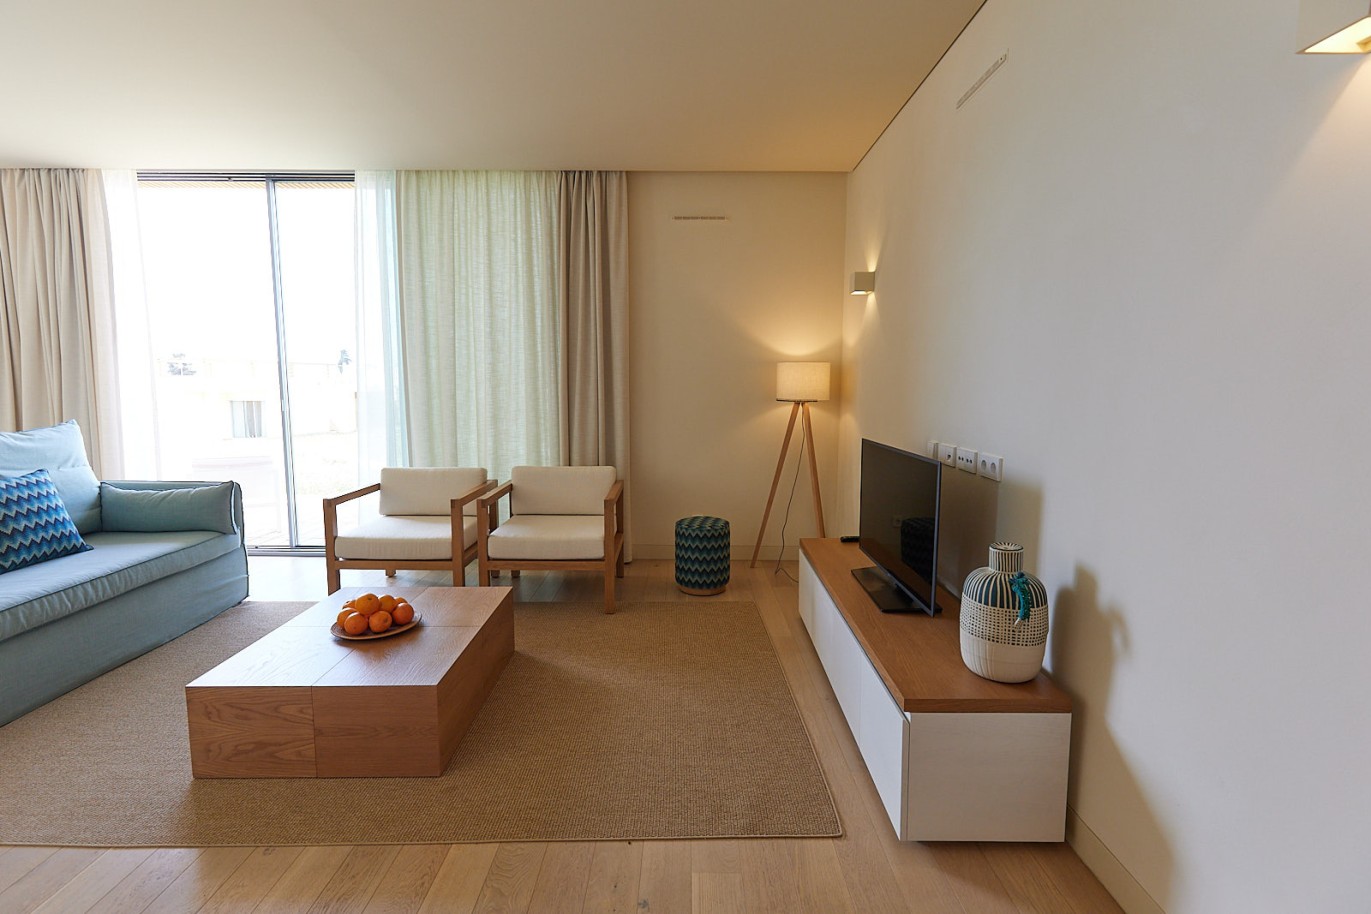 2 bedroom apartment in resort, for sale in Porches, Algarve_229174